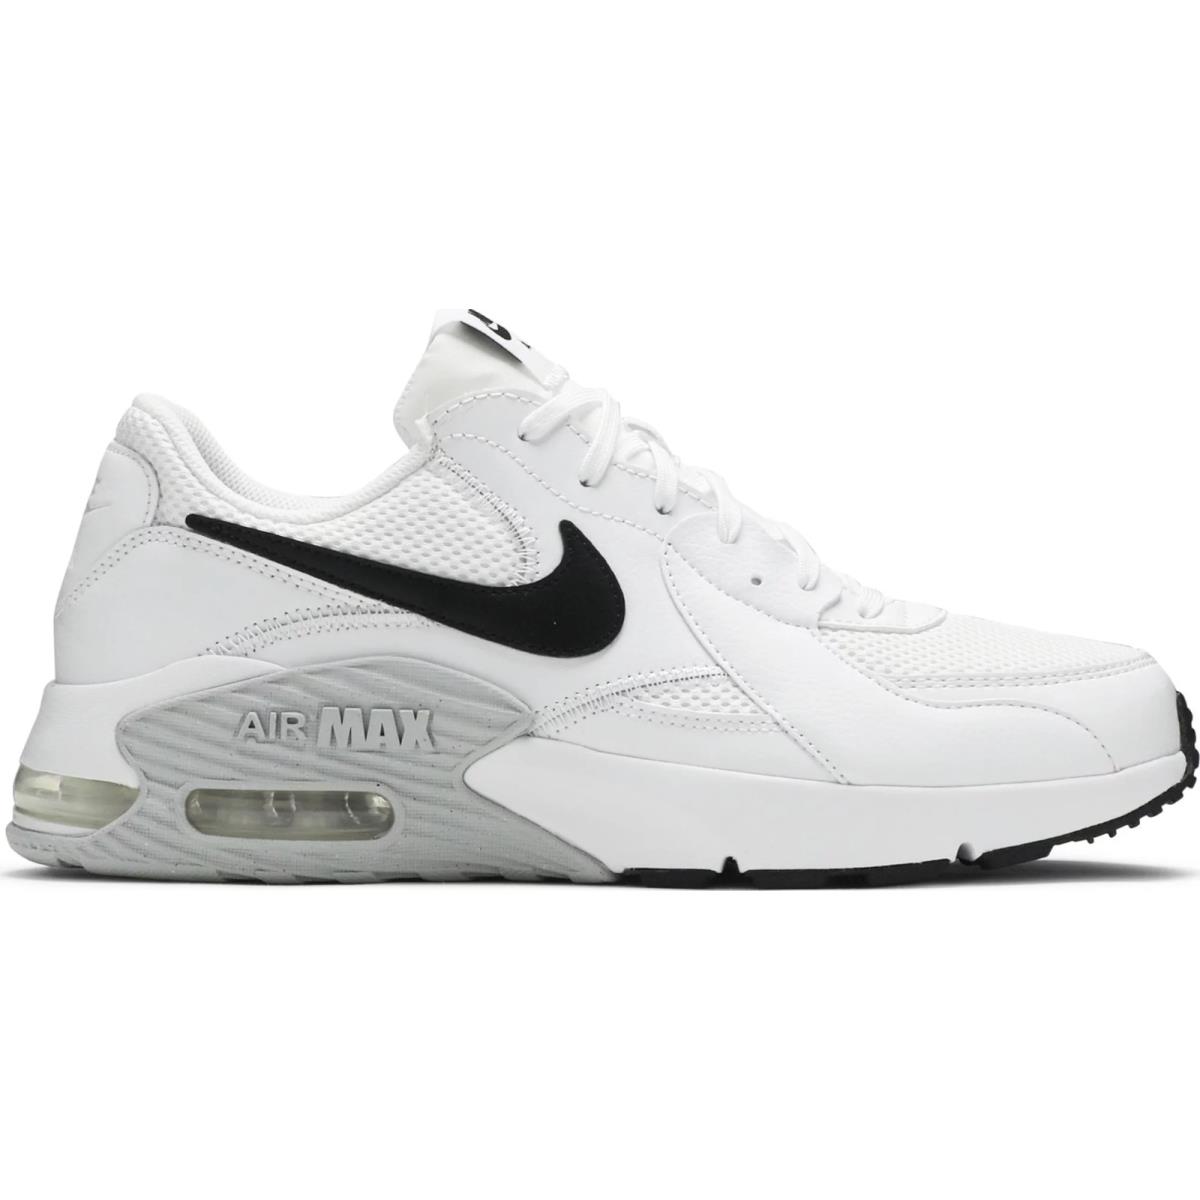 Nike Air Max Excee White Black Grey Sneakers Shoes Sportswear CD4165-100 Mens 12